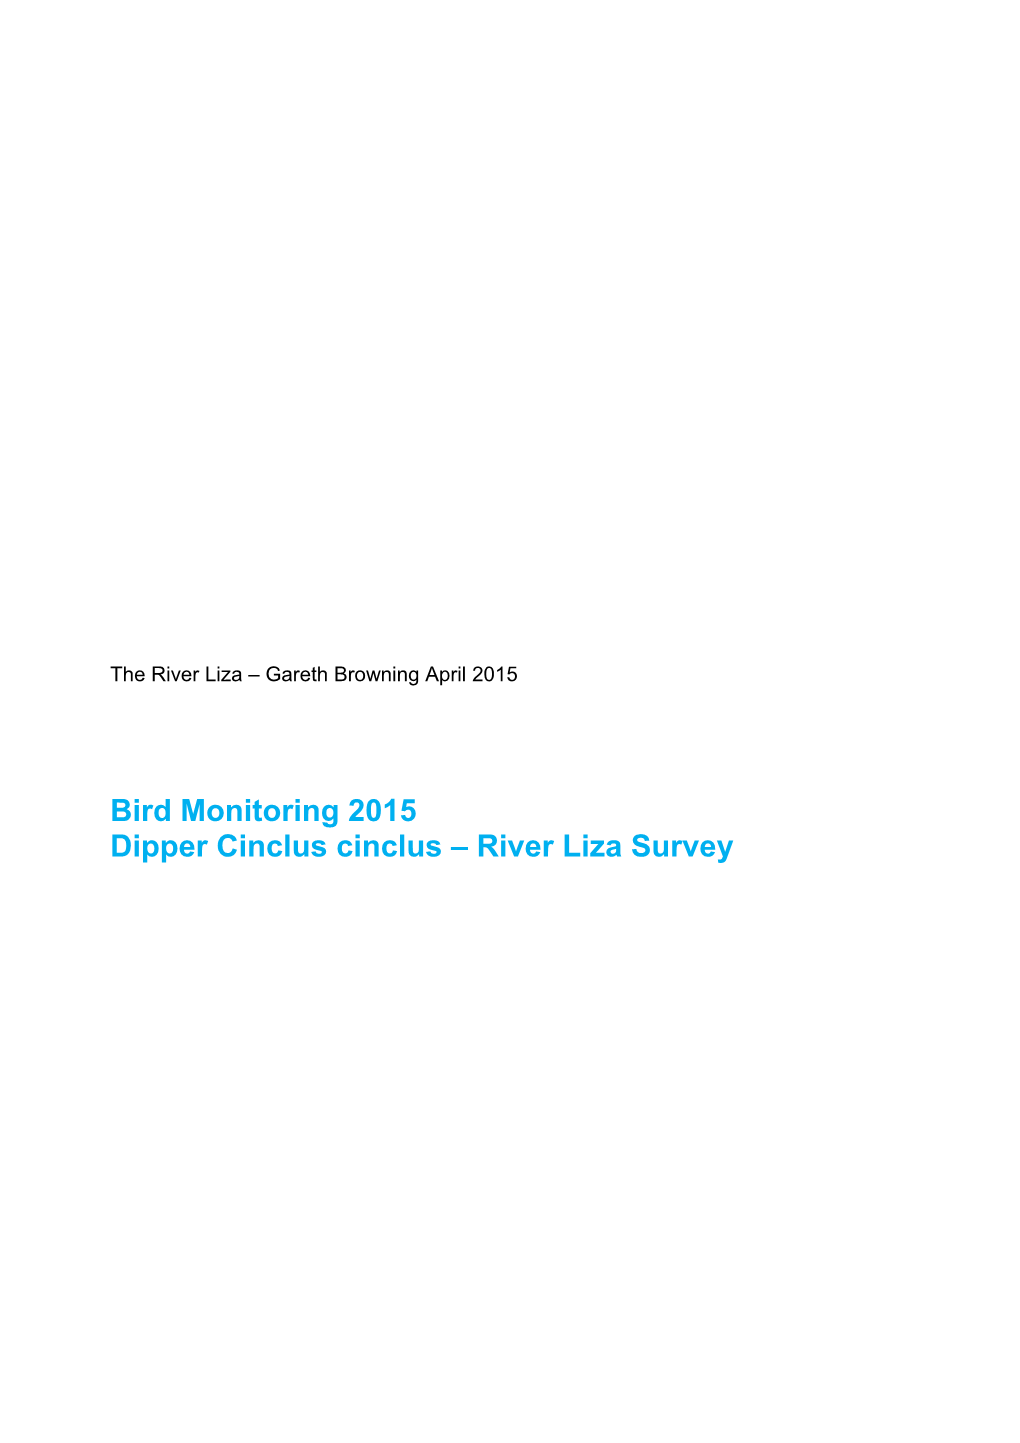 Dipper Cinclus Cinclus River Liza Survey